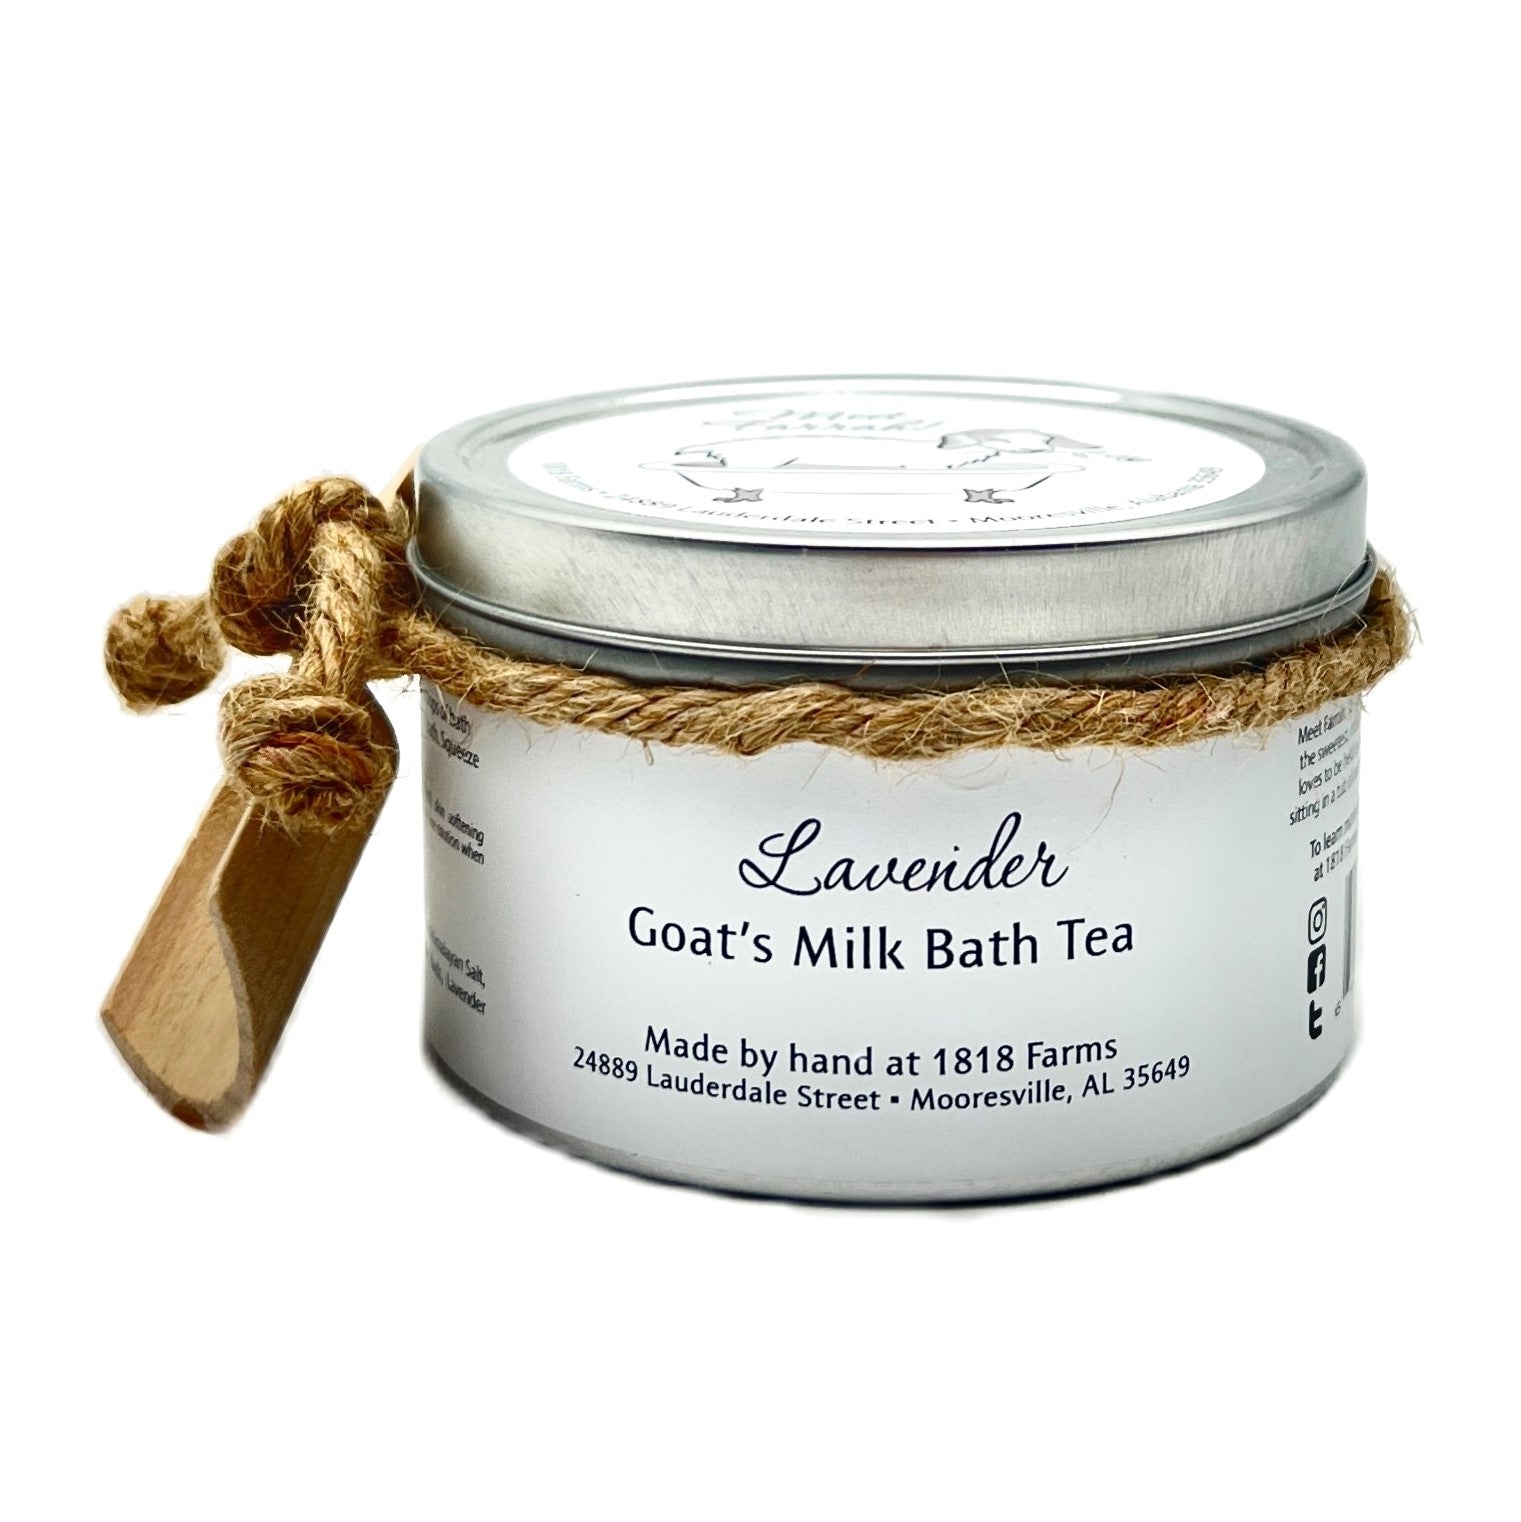 Lavender Goat's Milk Bath Tea Tin Bath Teas & Truffles 1818 Farms   